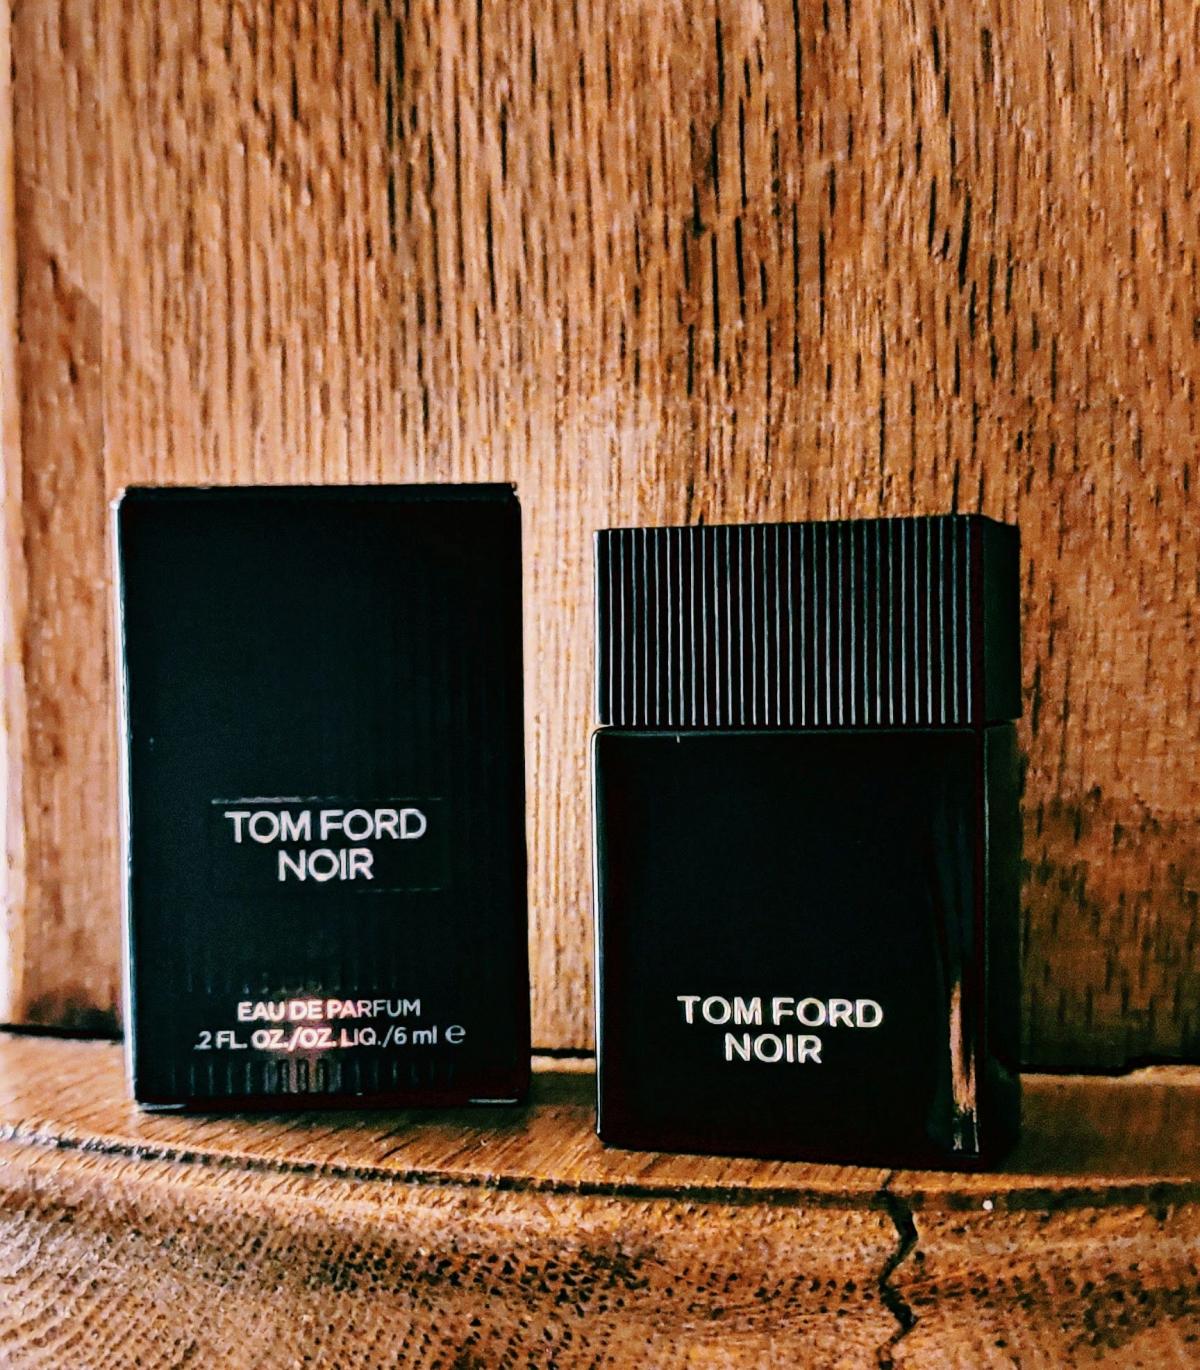 Noir Tom Ford cologne - a fragrance for men 2012